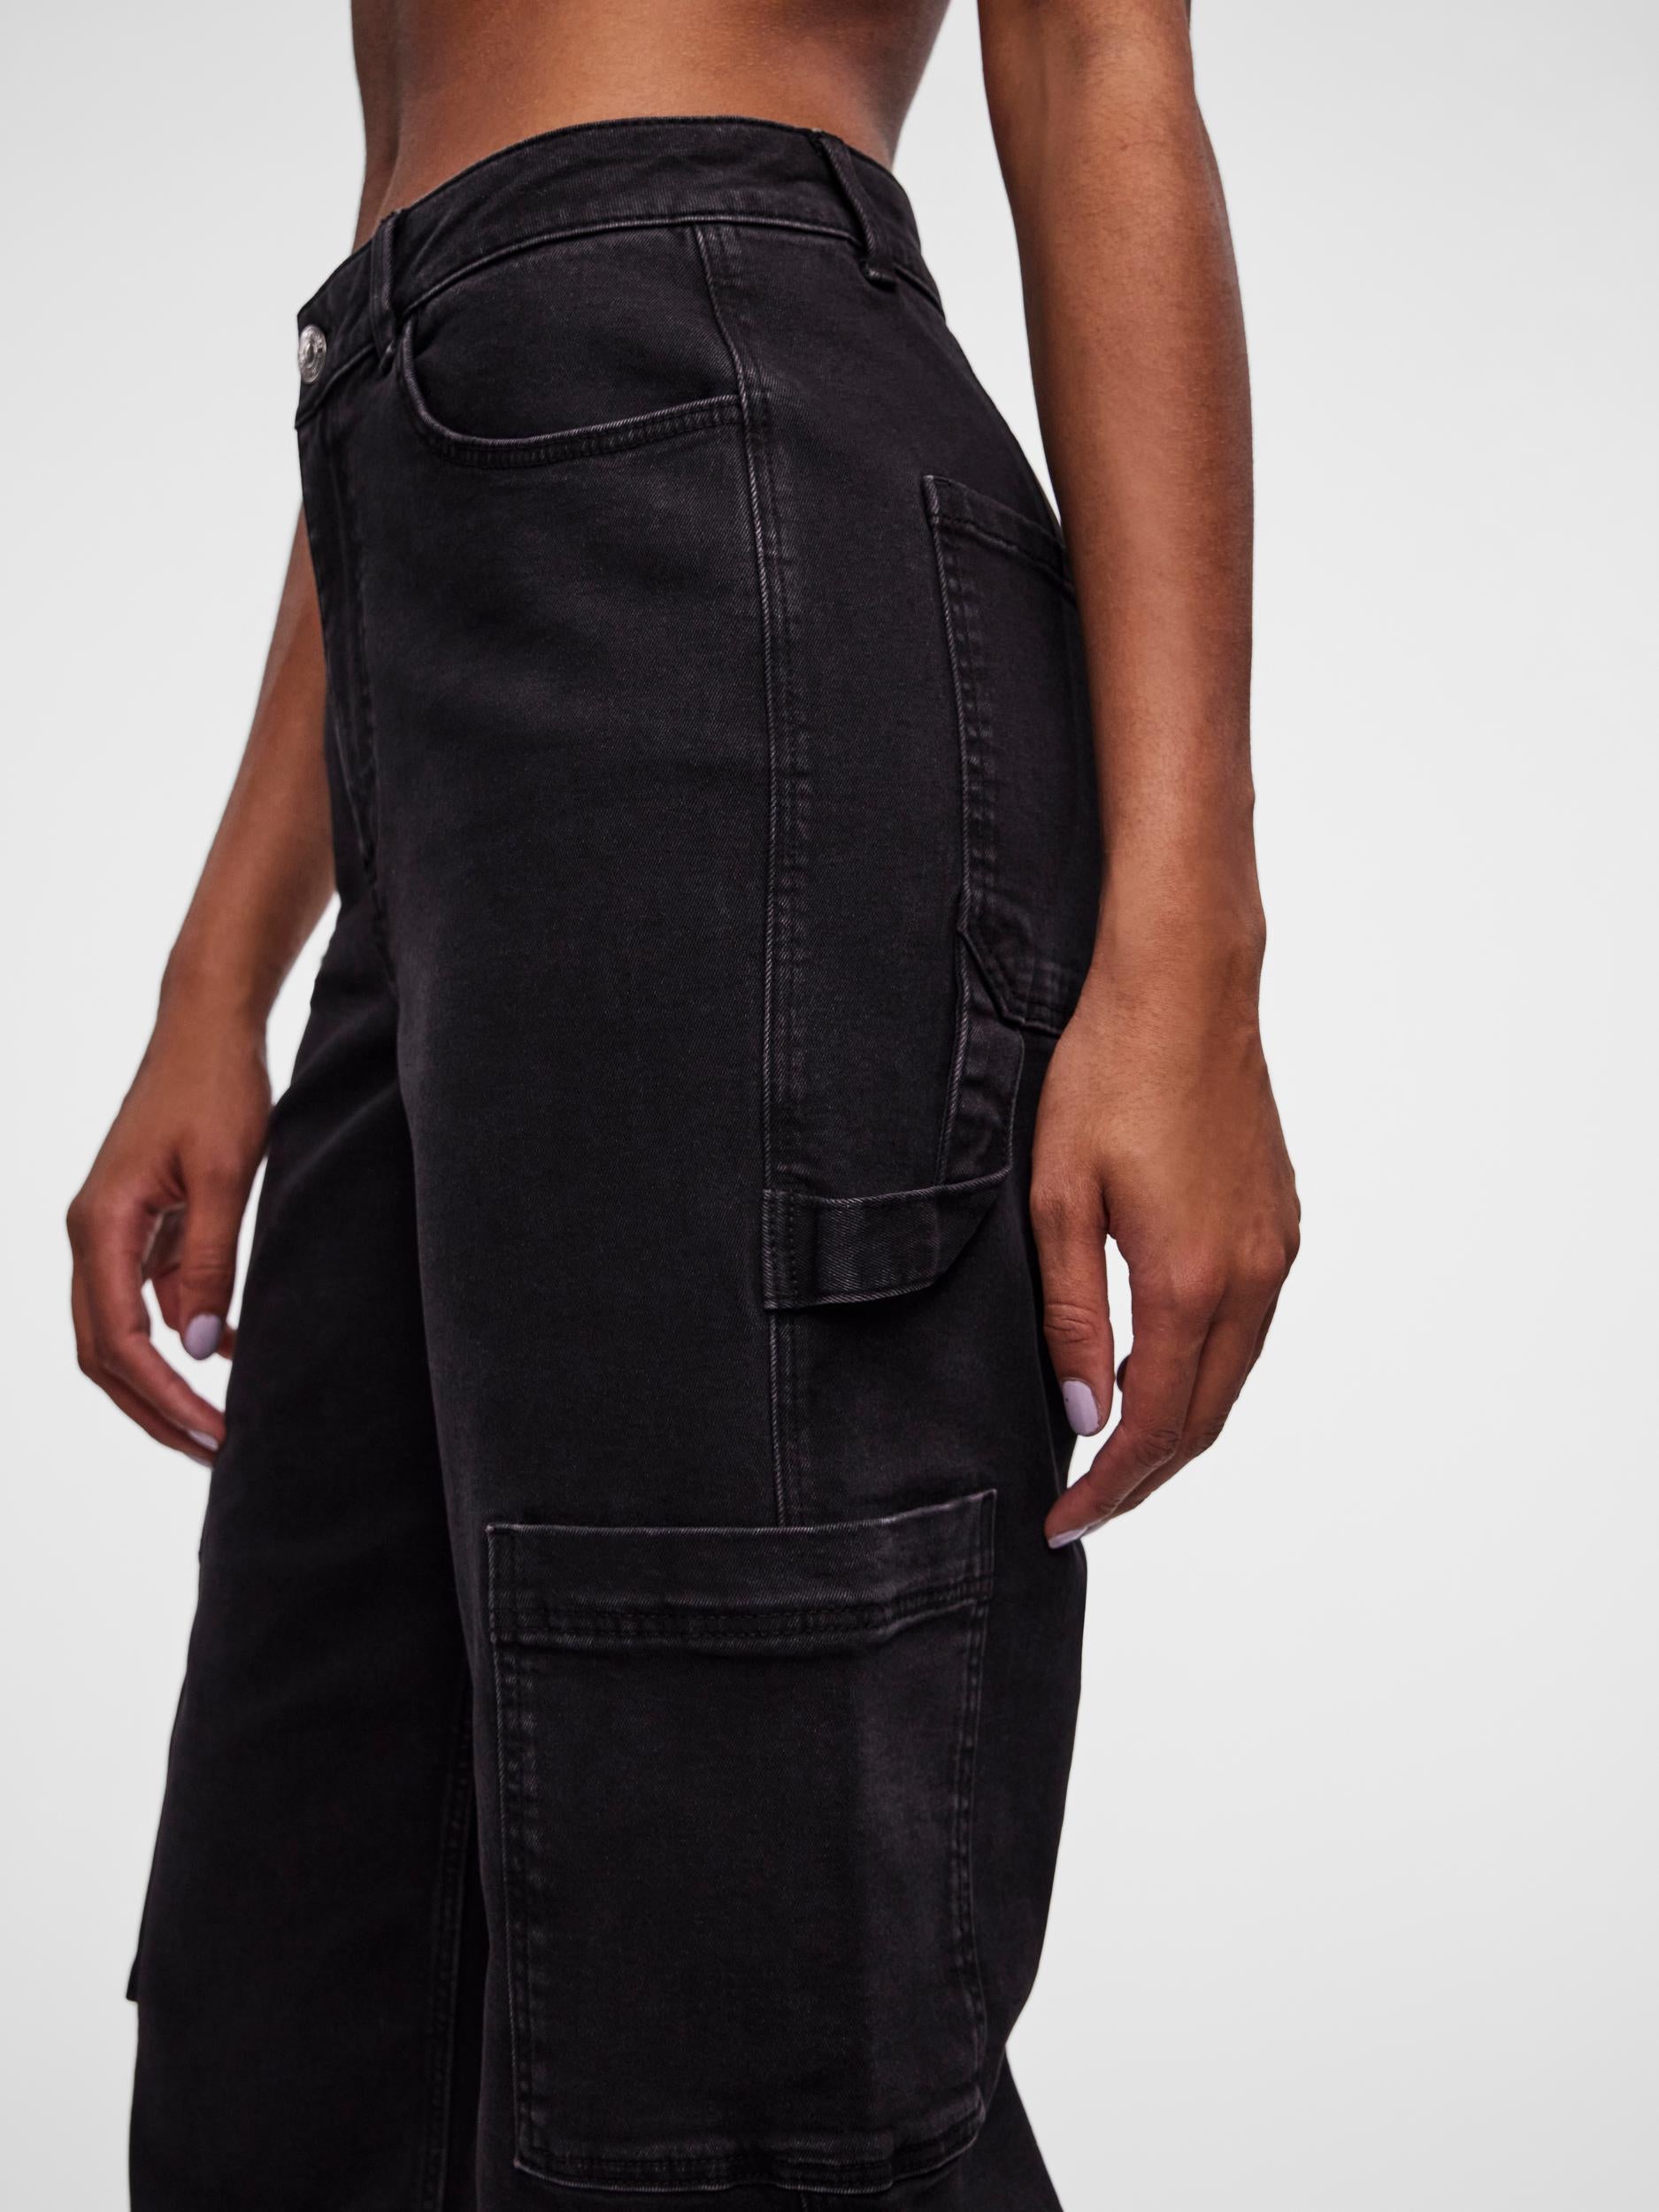 Pacsun Black Canvas Slim Cargo Black Pants Size M | eBay